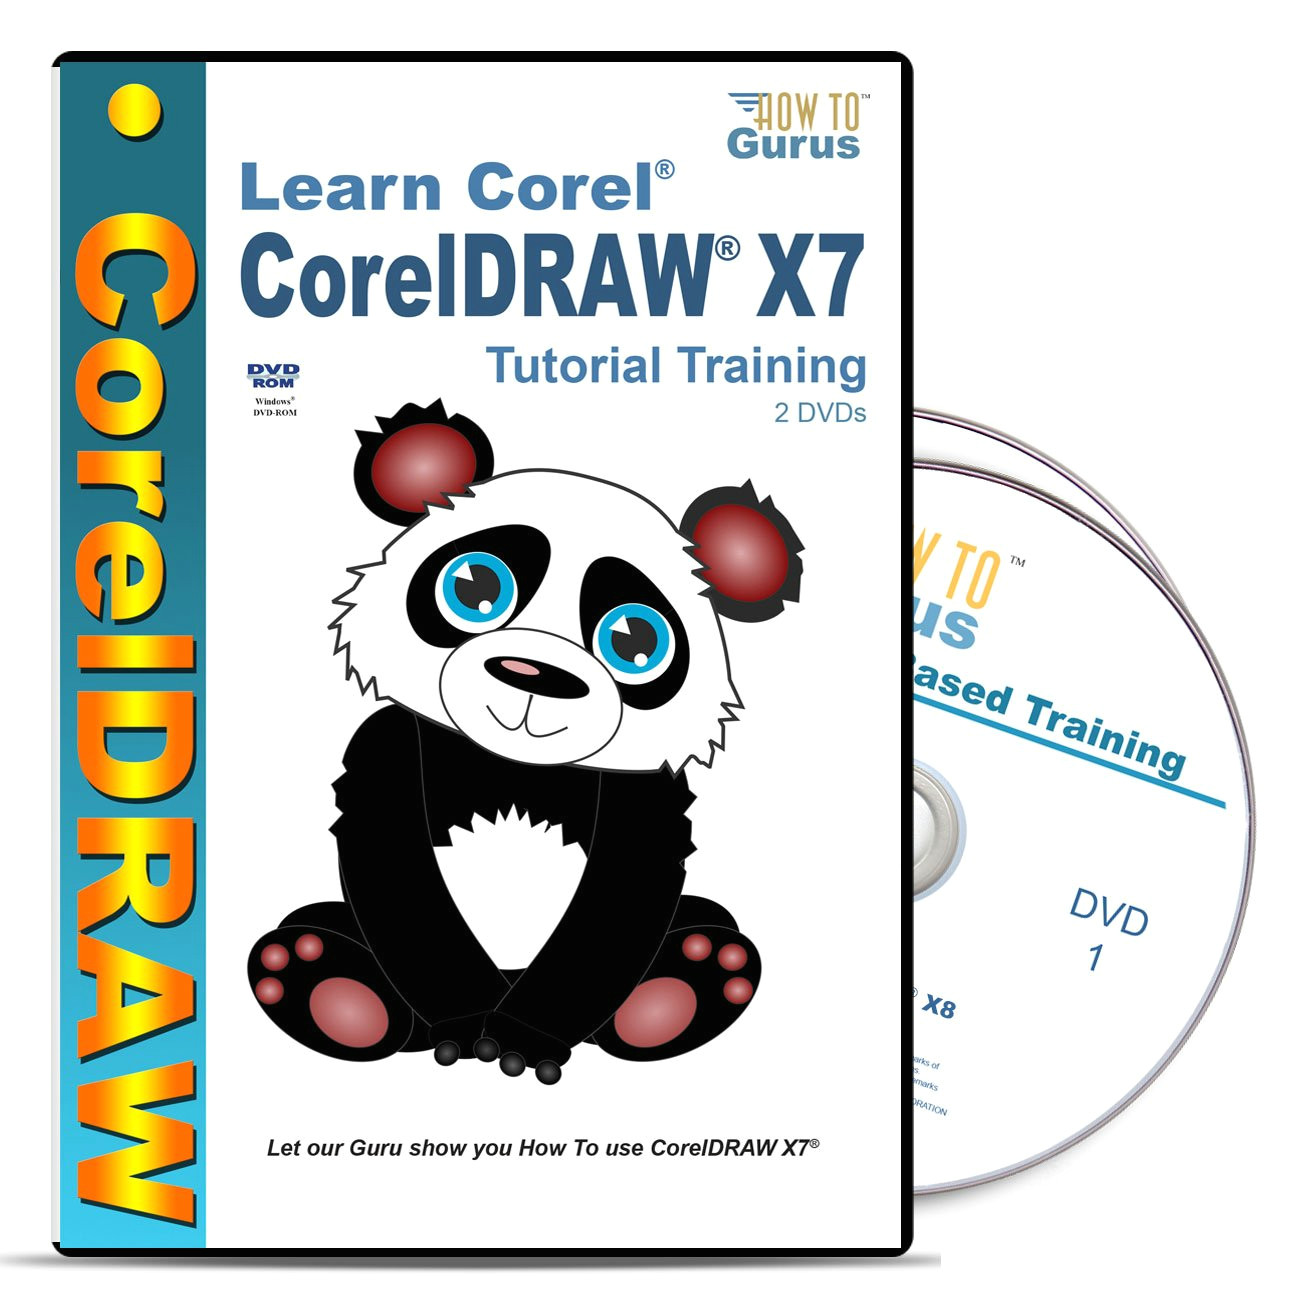 Drawing An Anime Cartoon In Coreldraw Amazon Com Corel Draw Coreldraw X7 Tutorial Training On 2 Dvds Over